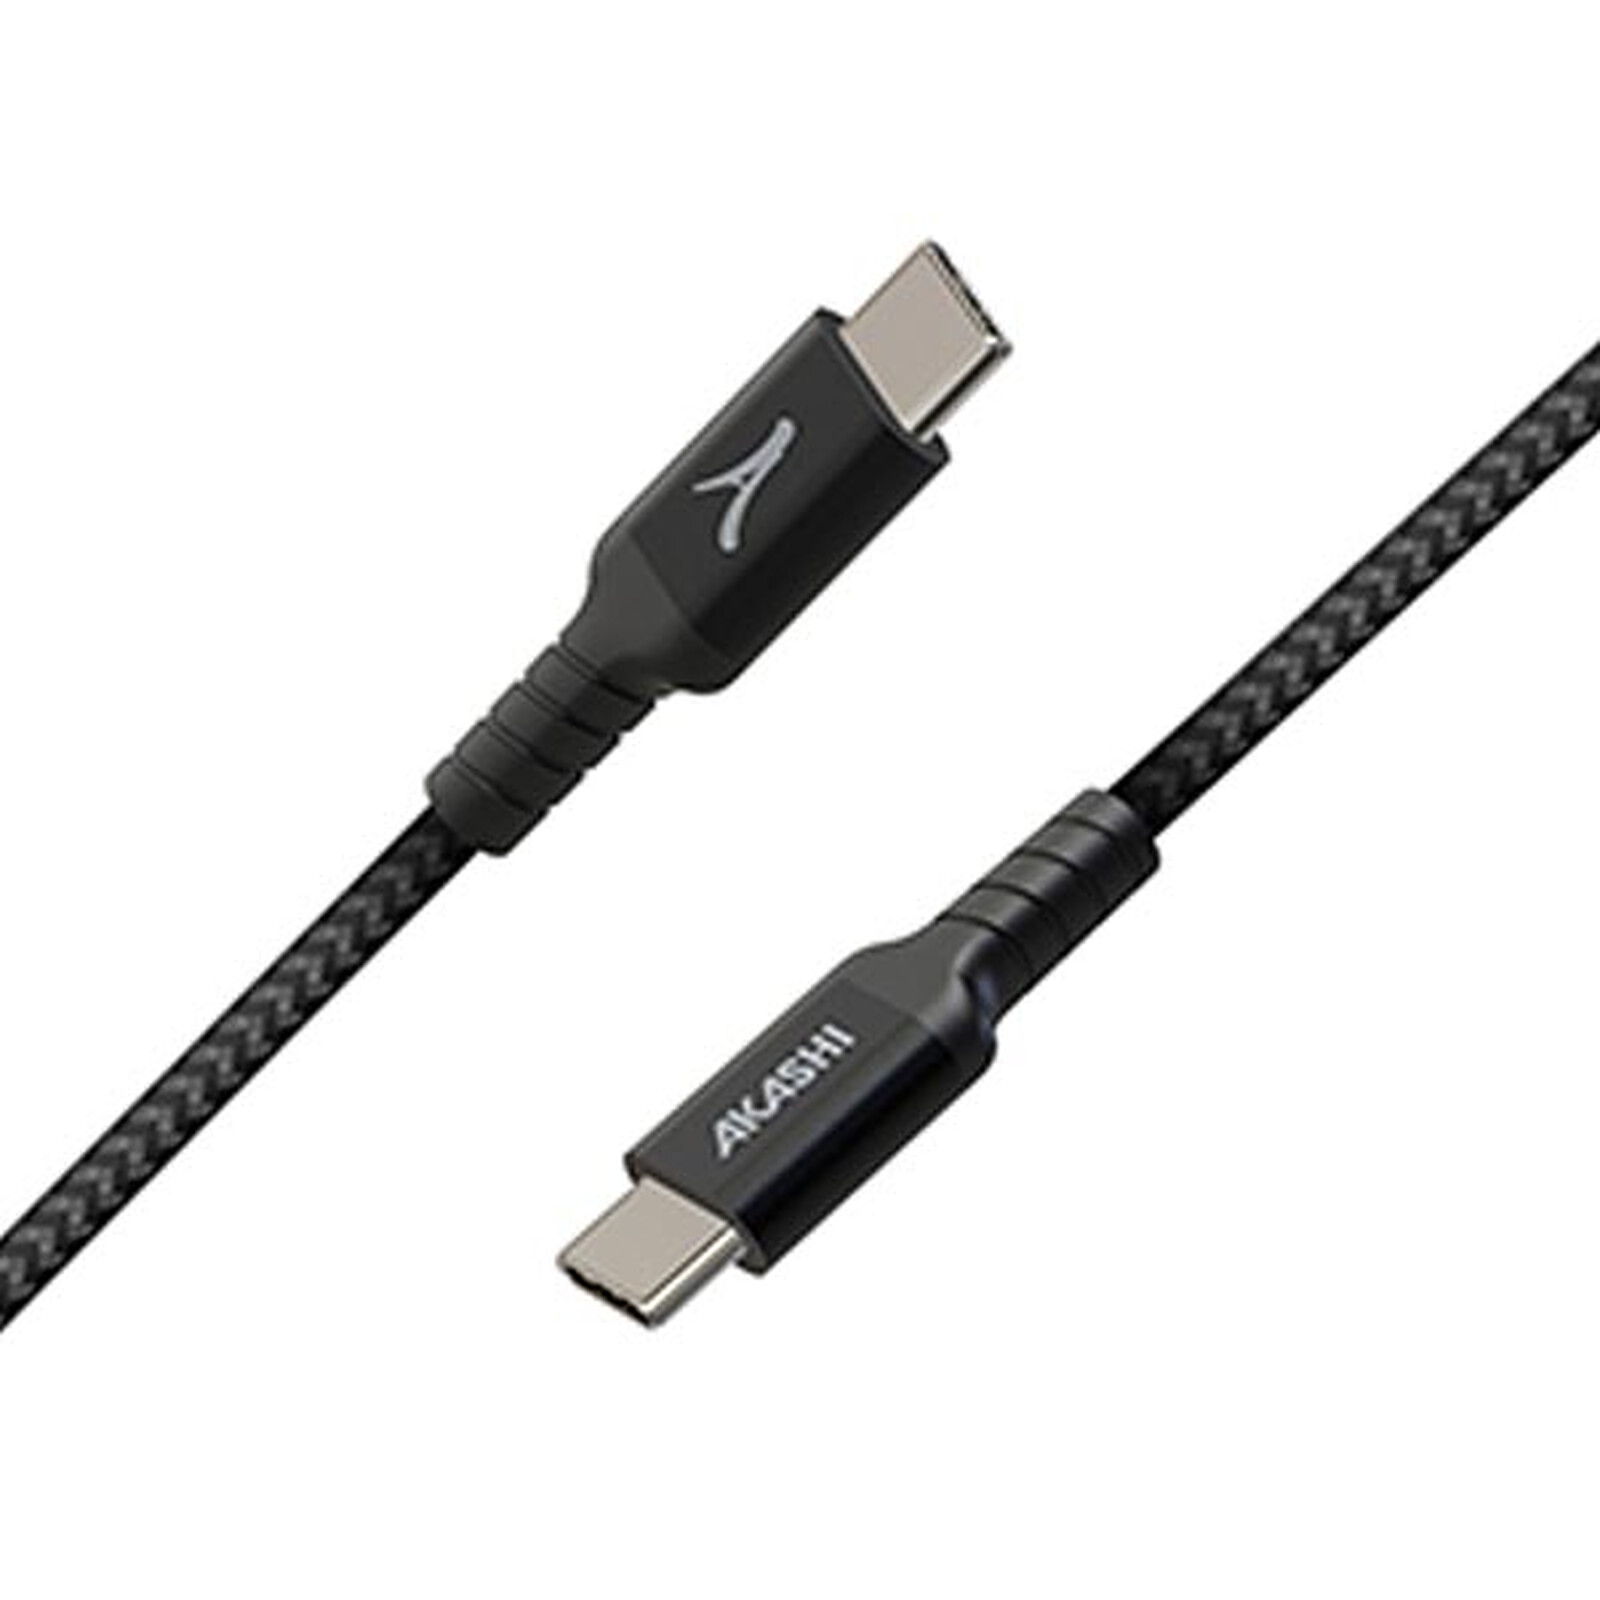 Akashi Câble Eco 3-en-1 USB-C vers USB-C / Lightning / micro USB